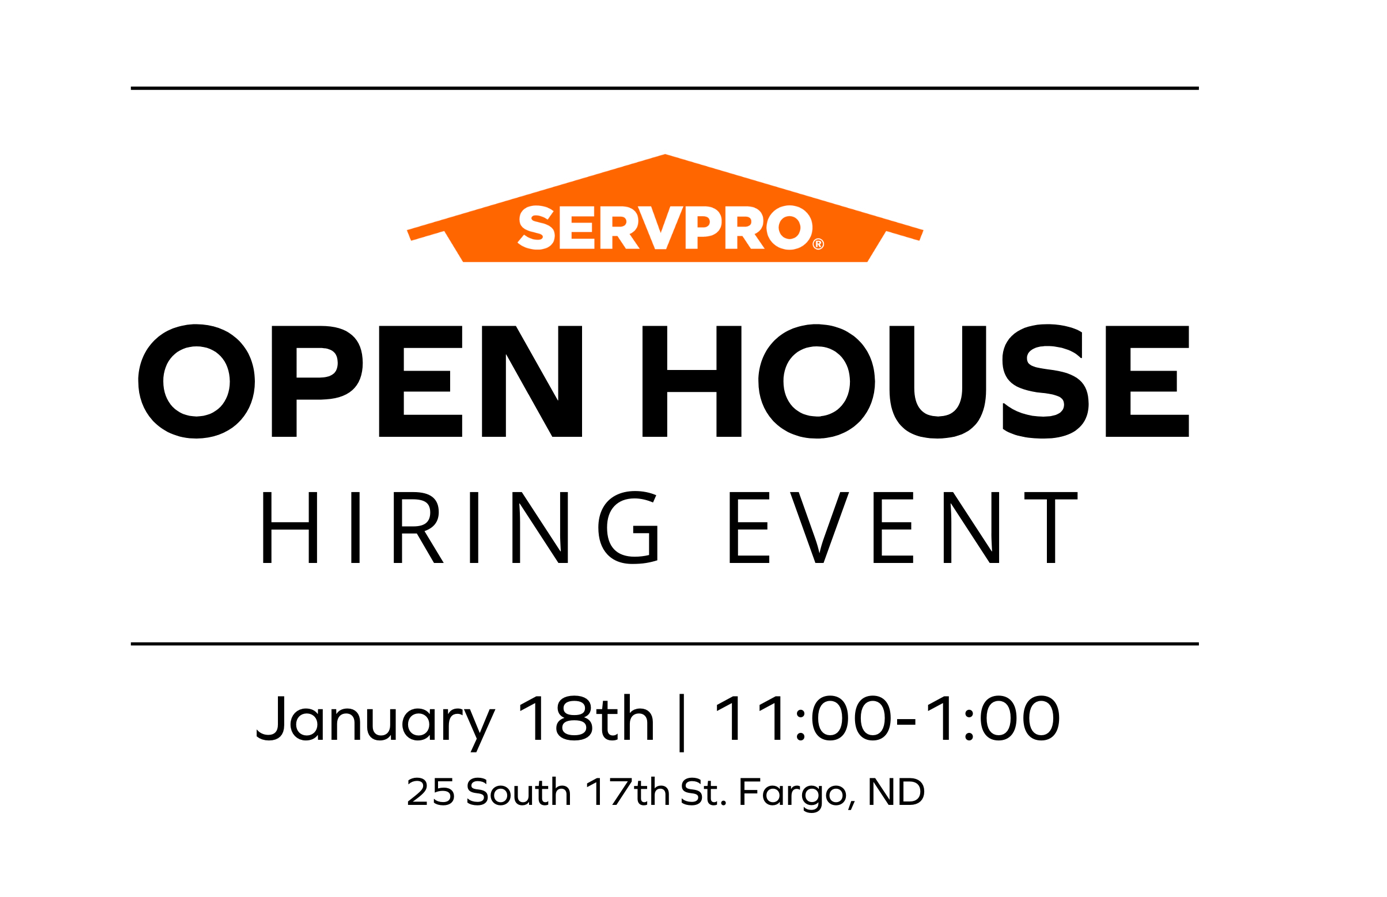 Open house hiring event